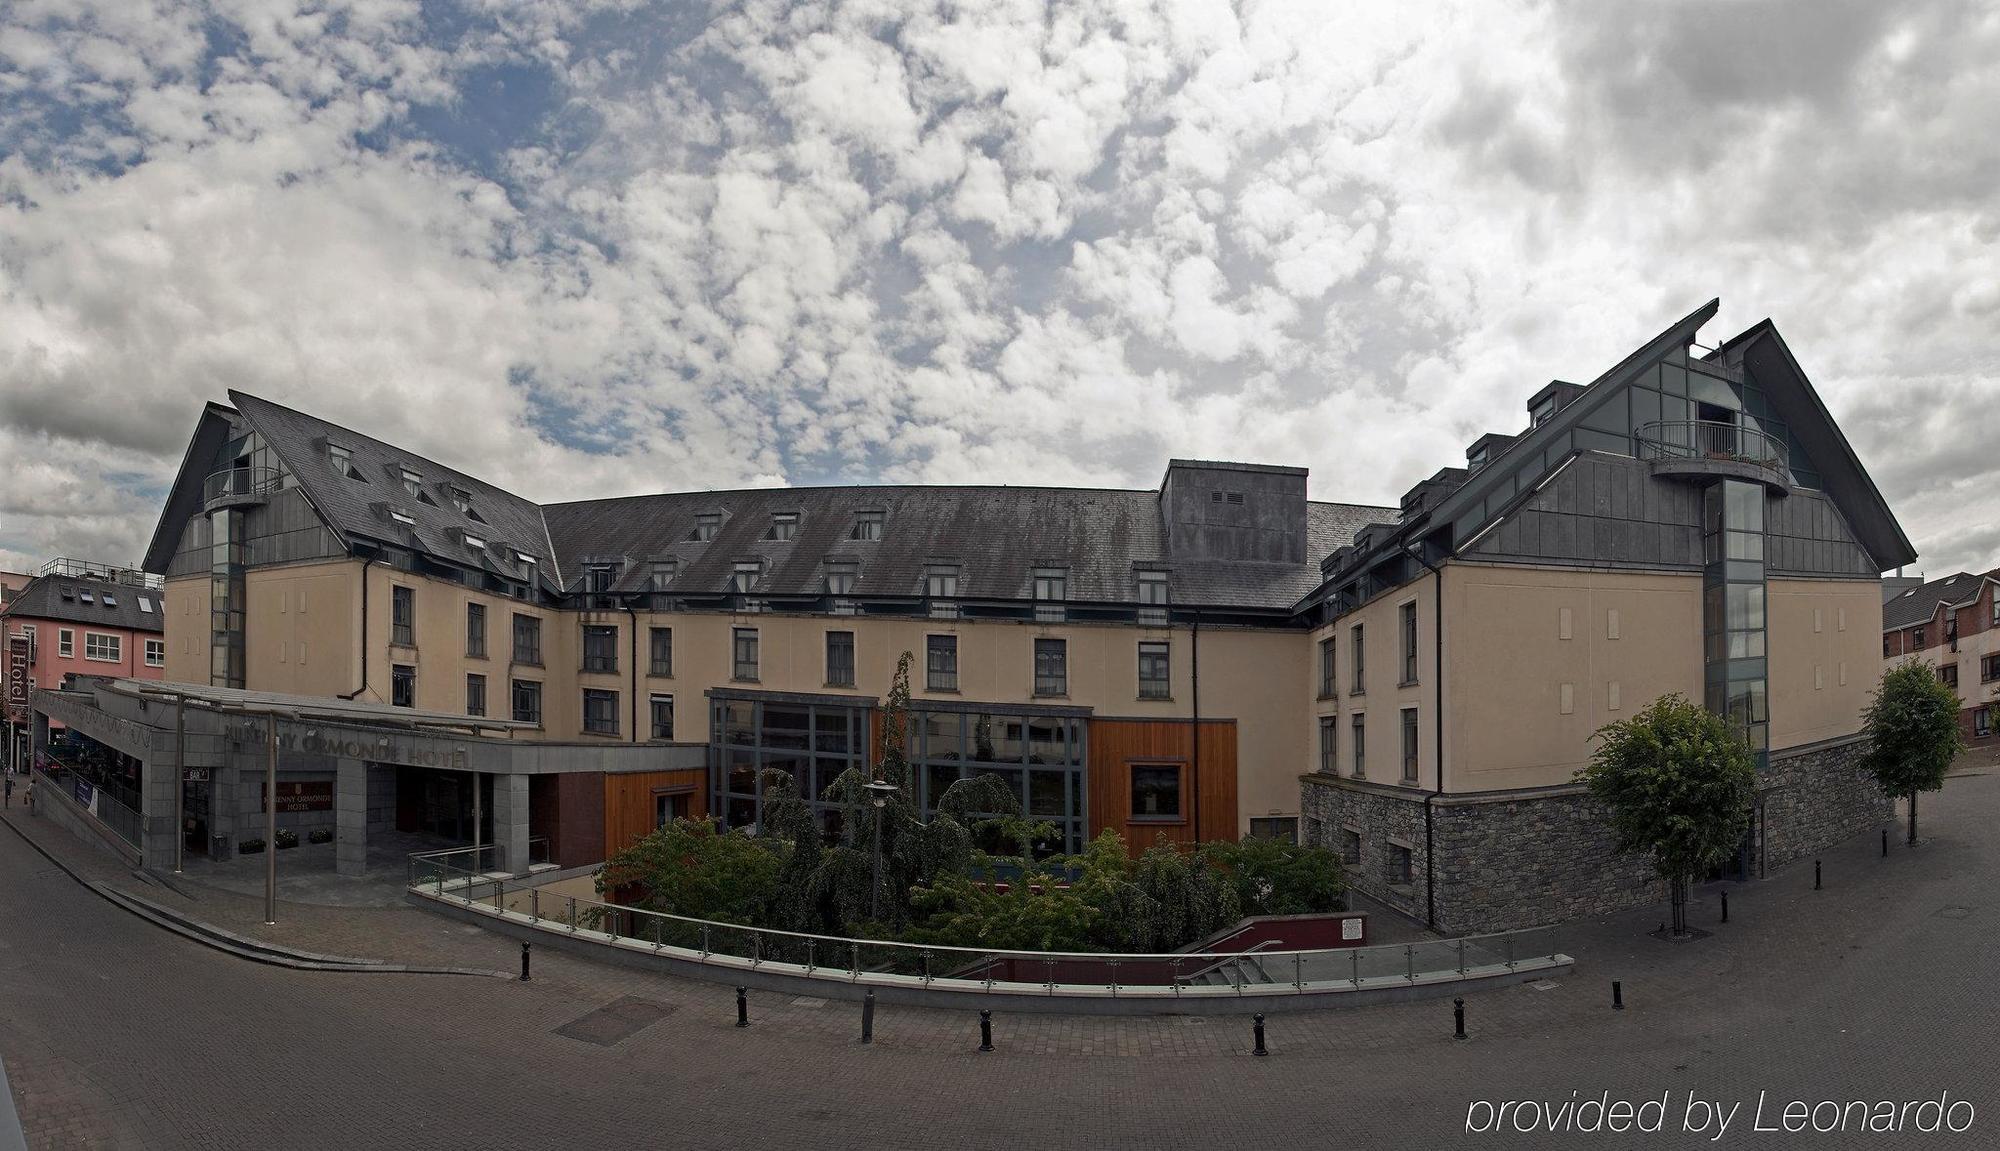 Kilkenny Ormonde Hotel Extérieur photo